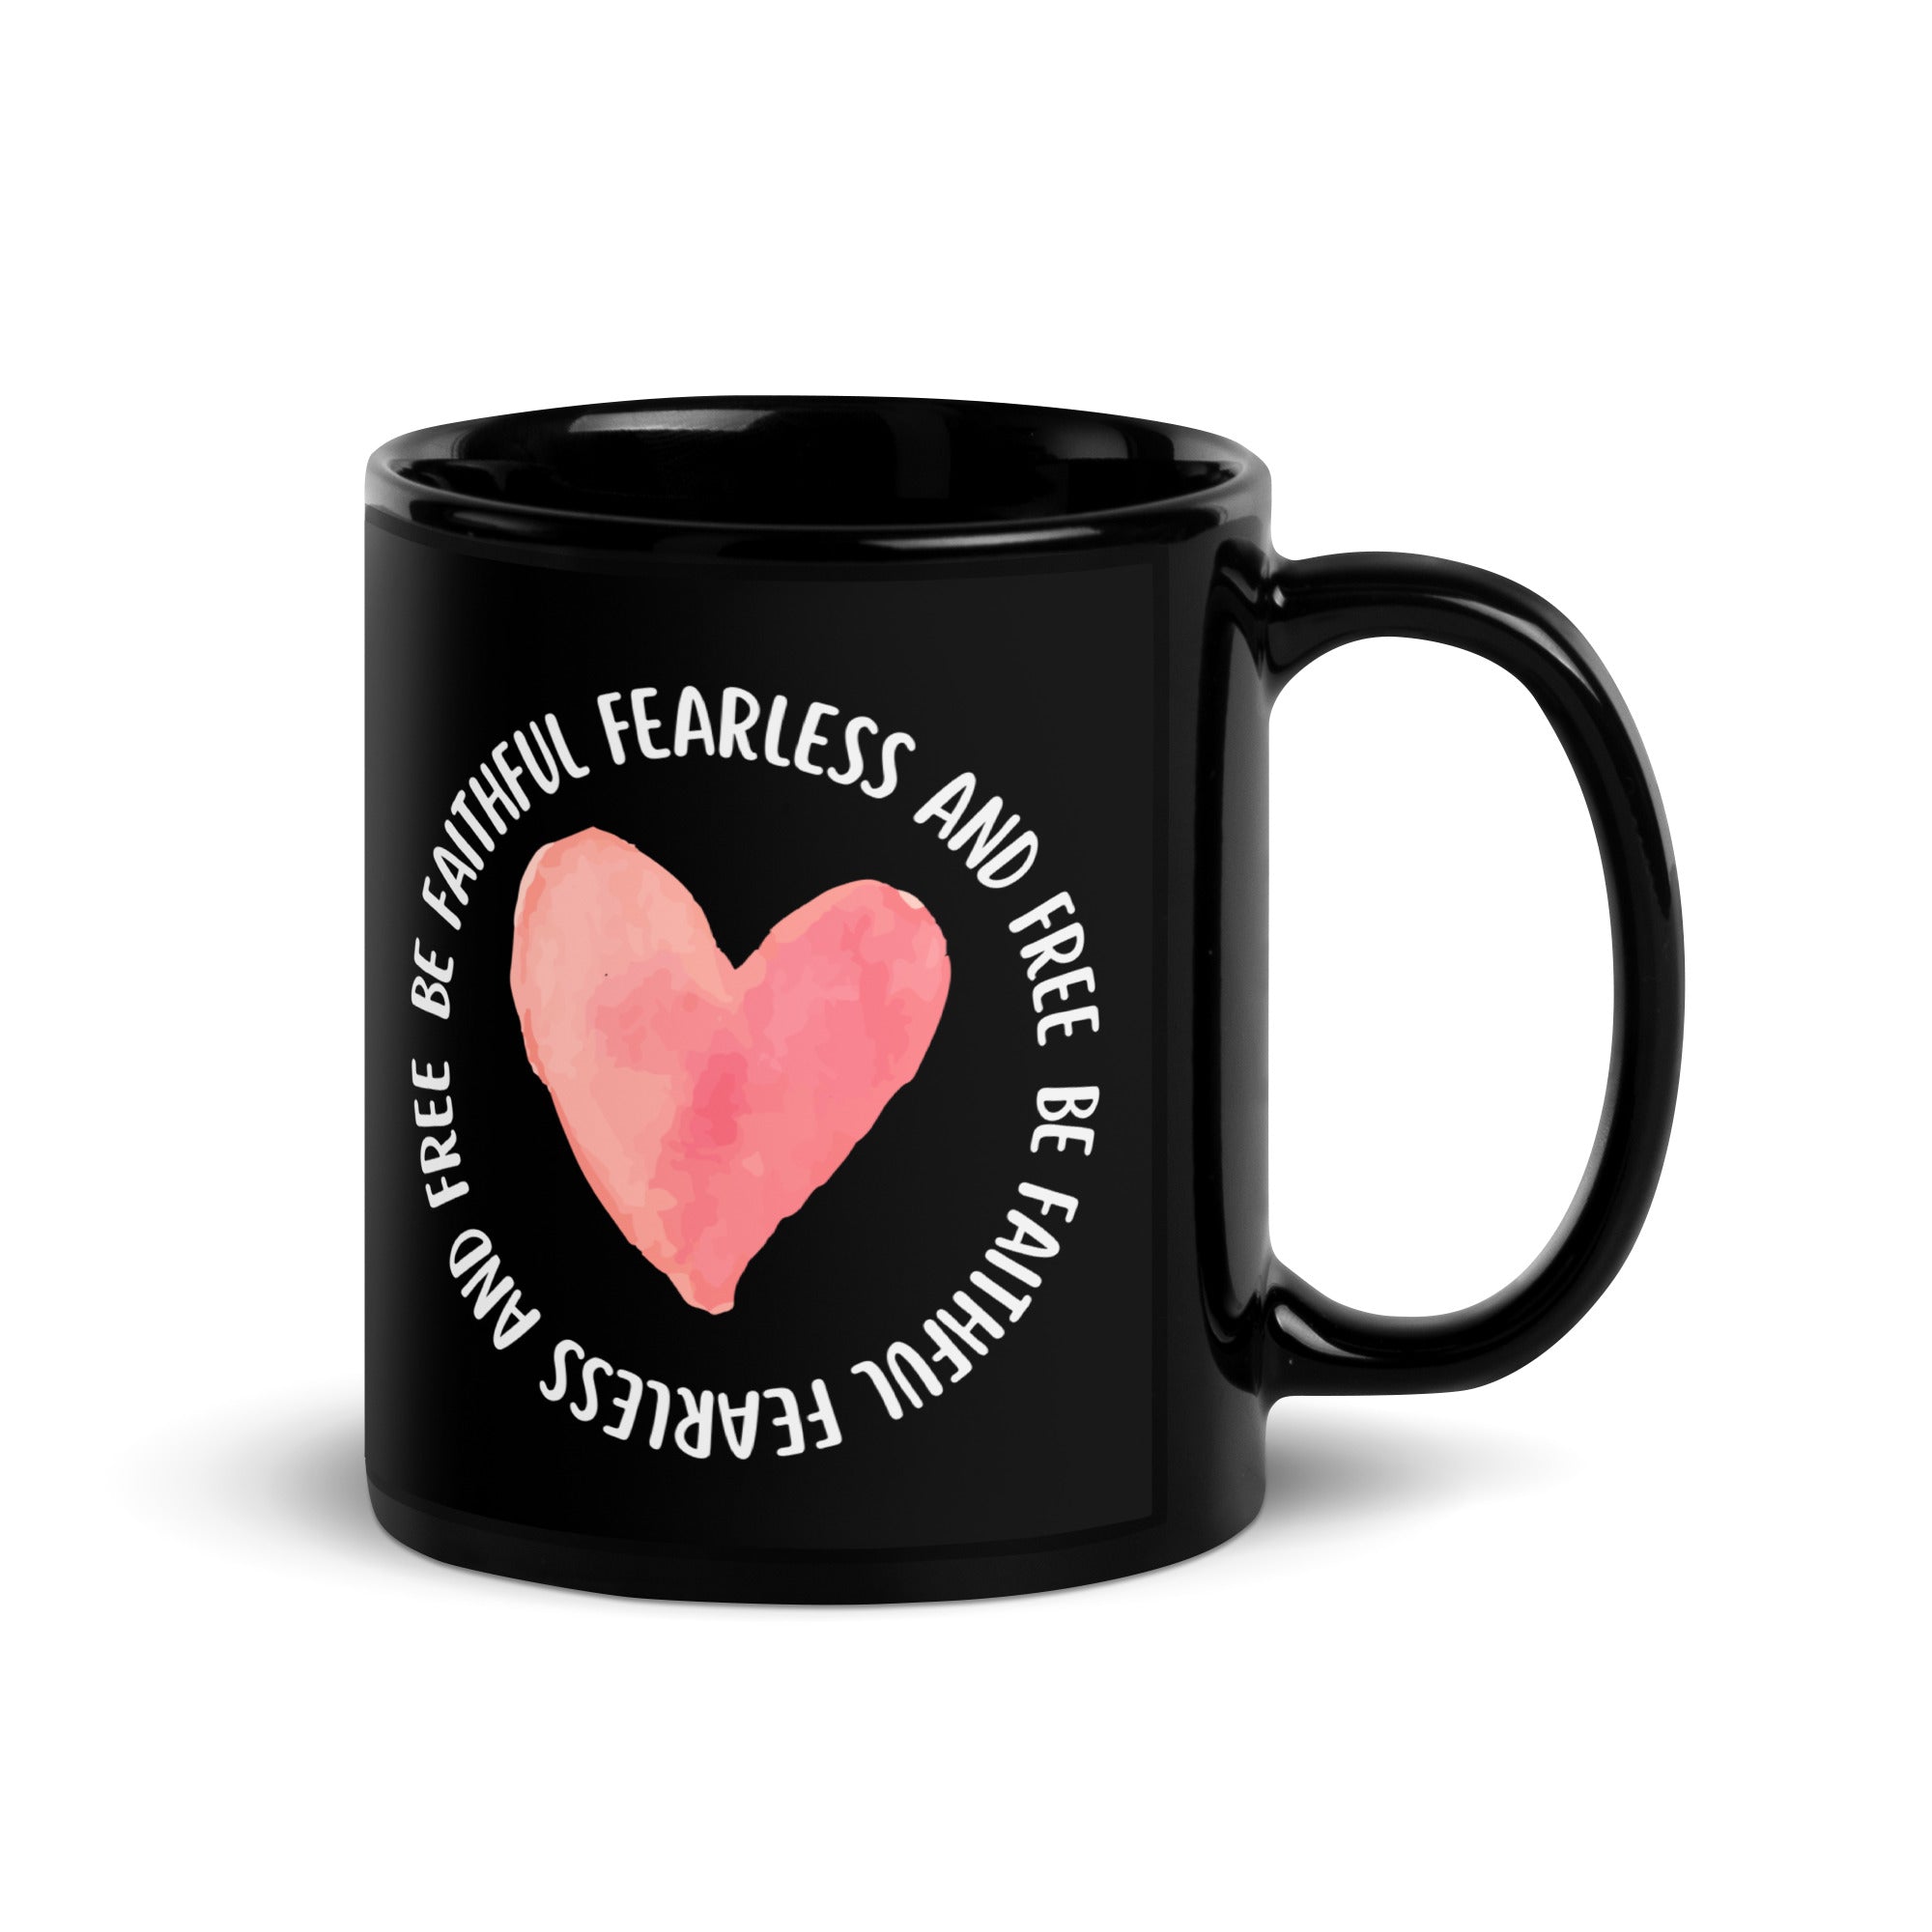 Be Faithful Fearless And Free Black Glossy Mug